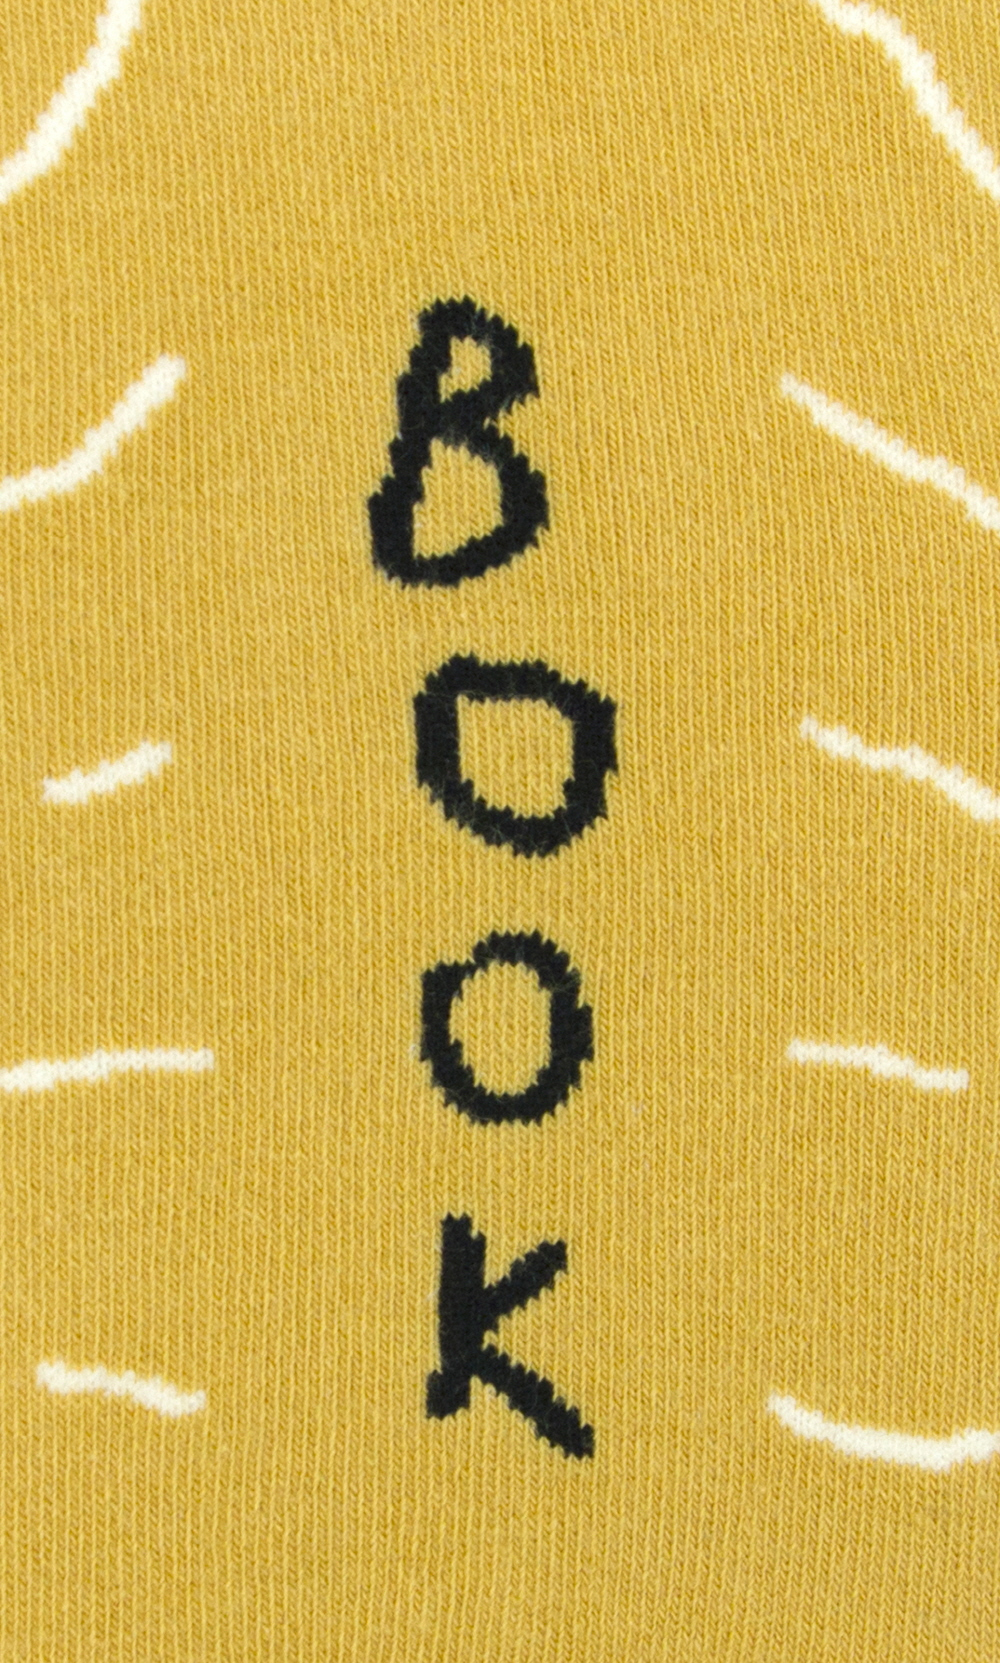 socks detail image-S1L19